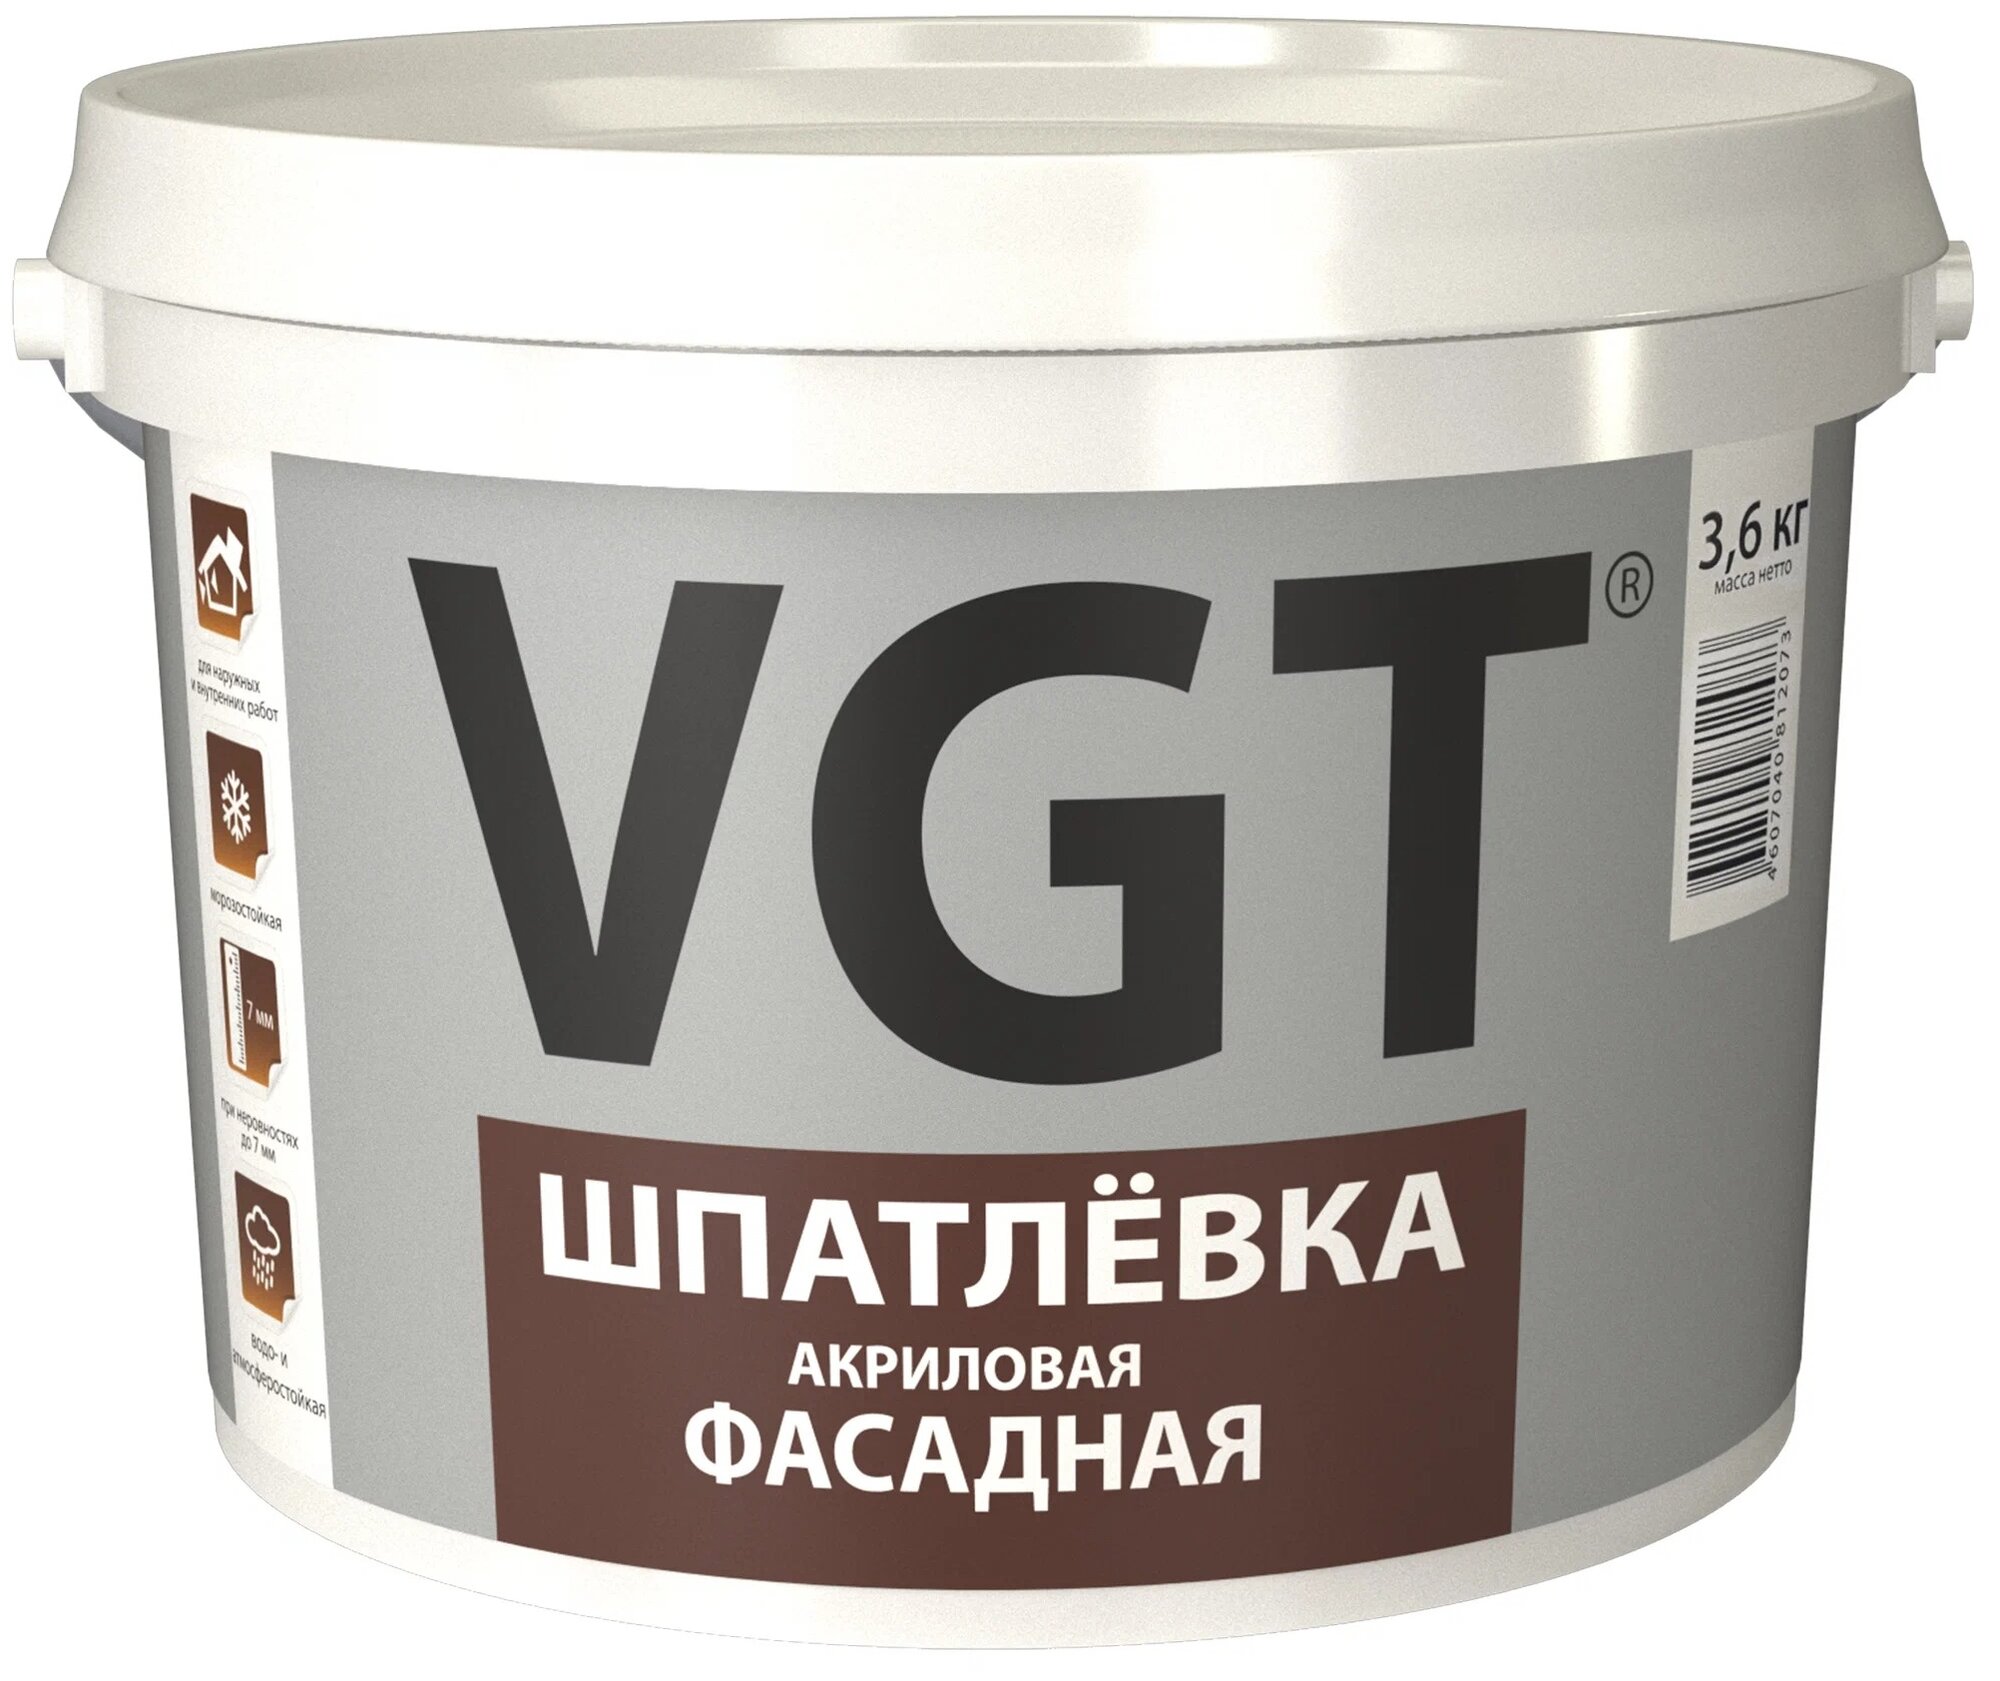 Шпатлевка VGT фасадная 3.6 кг